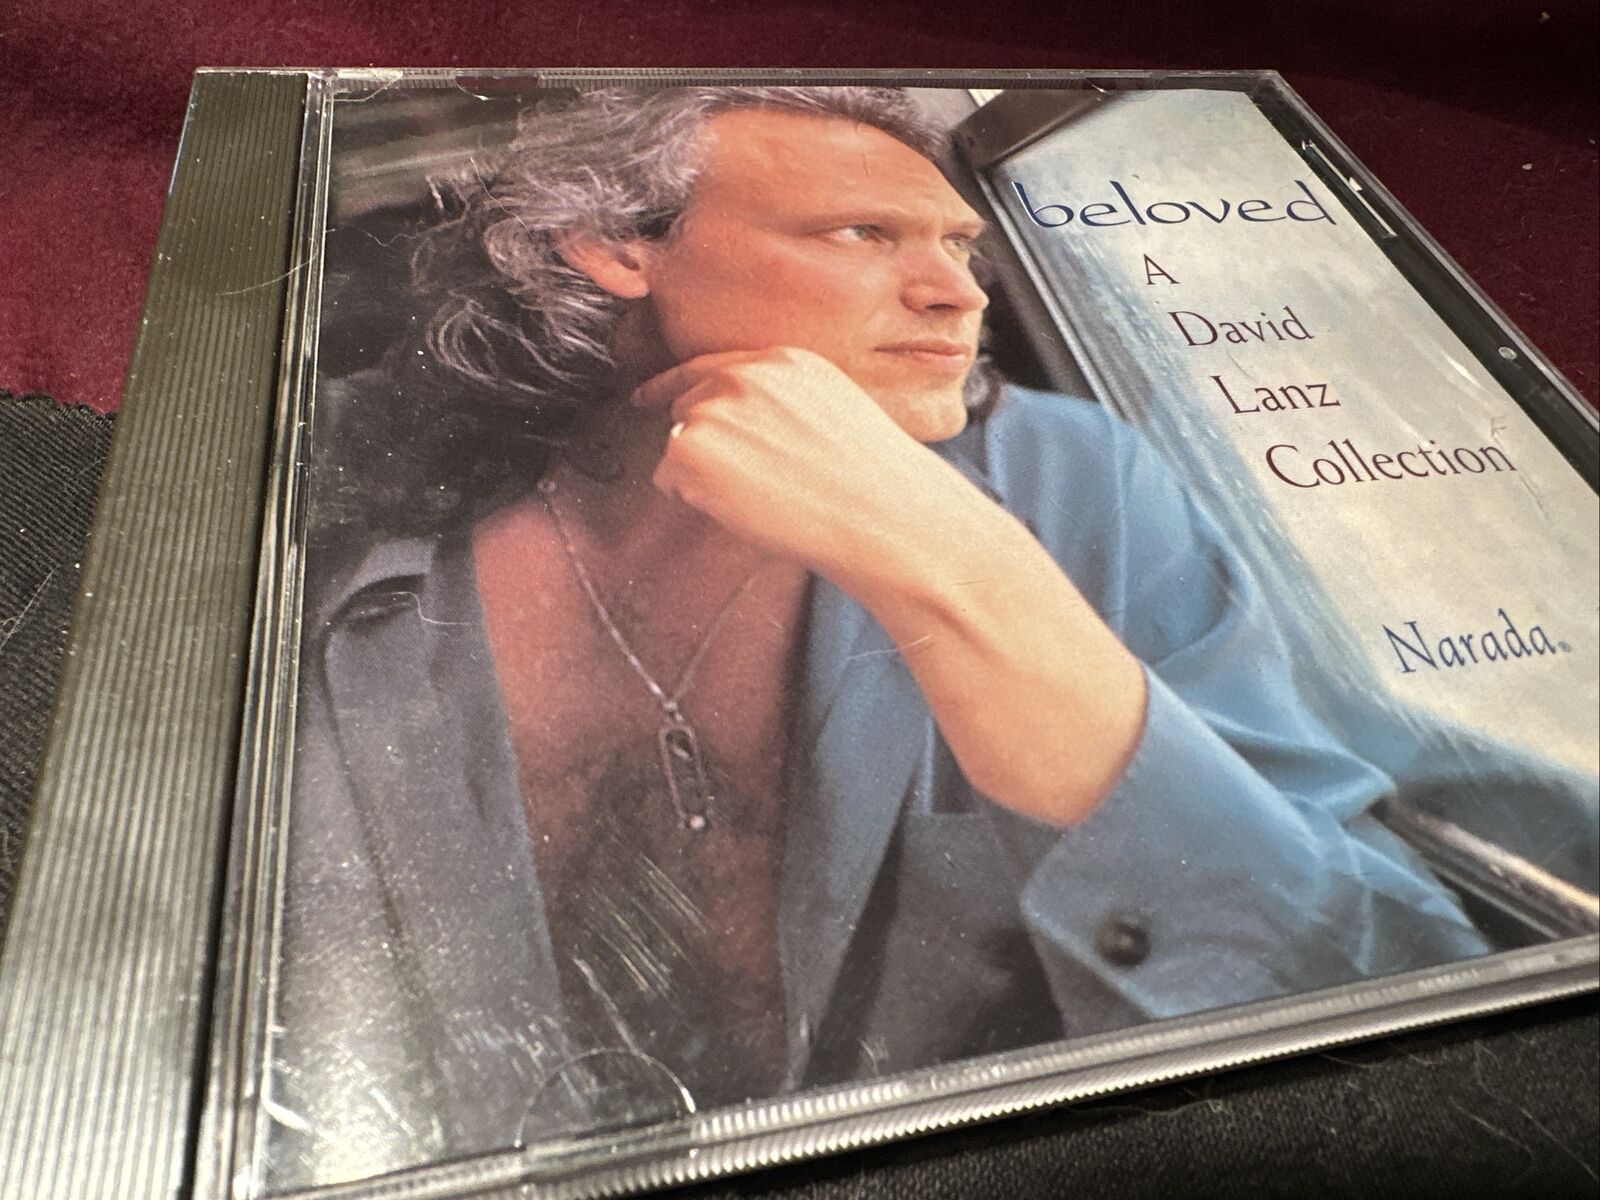 Beloved: A David Lanz Collection - CD